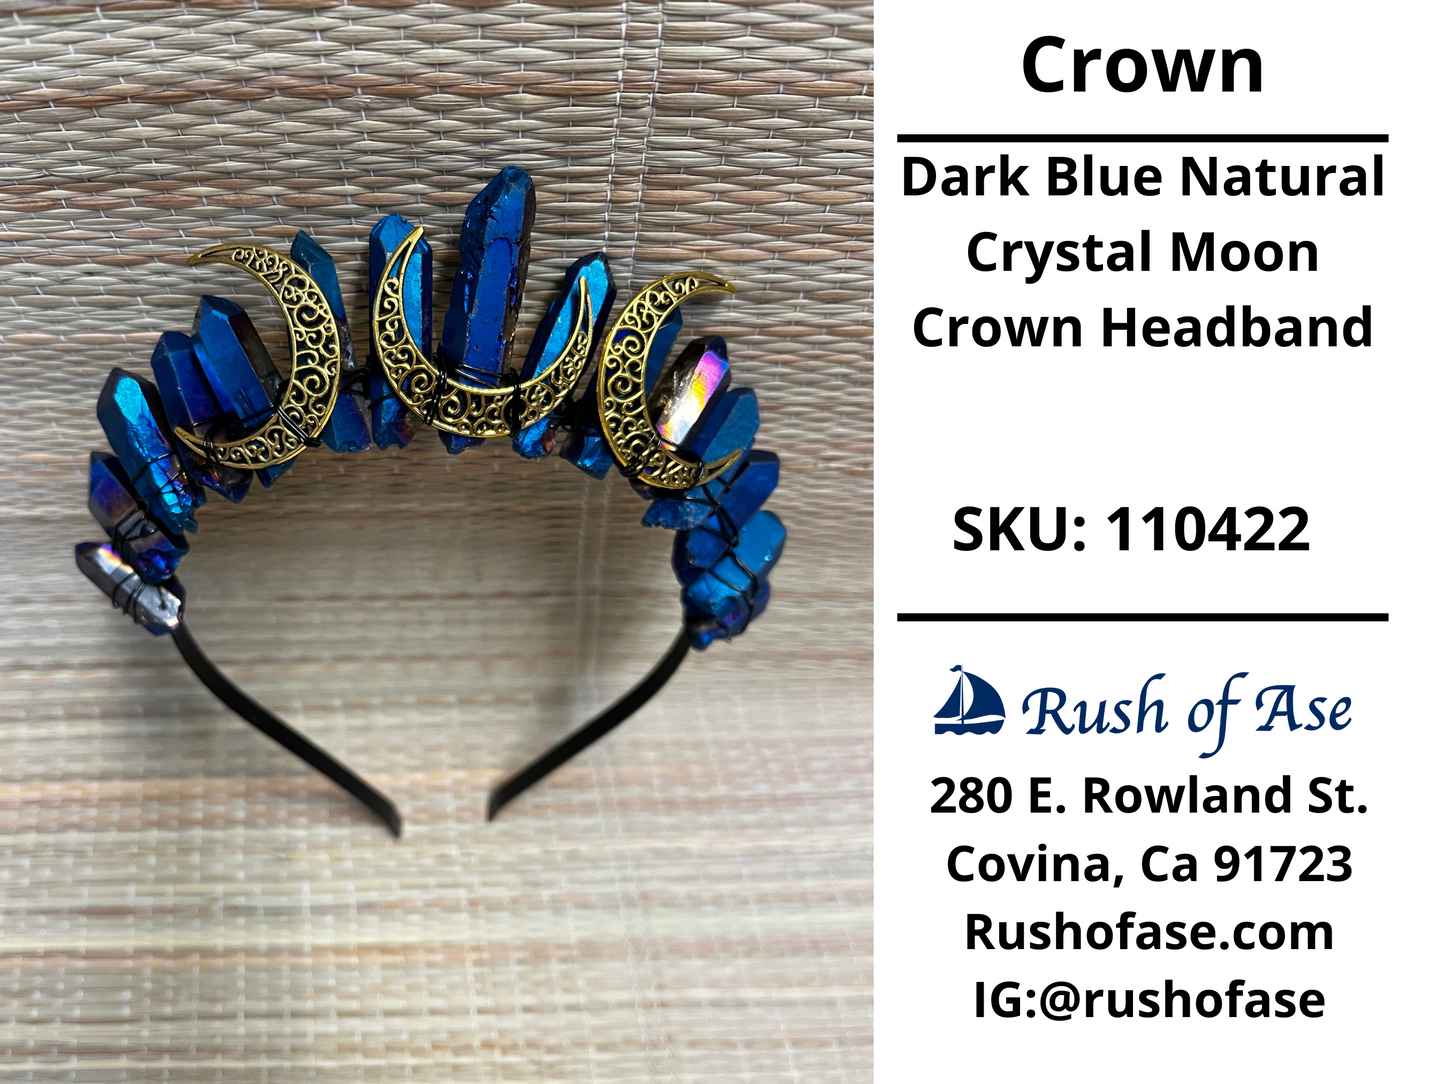 Dark Blue Natural Crystal Moon Crown Headband